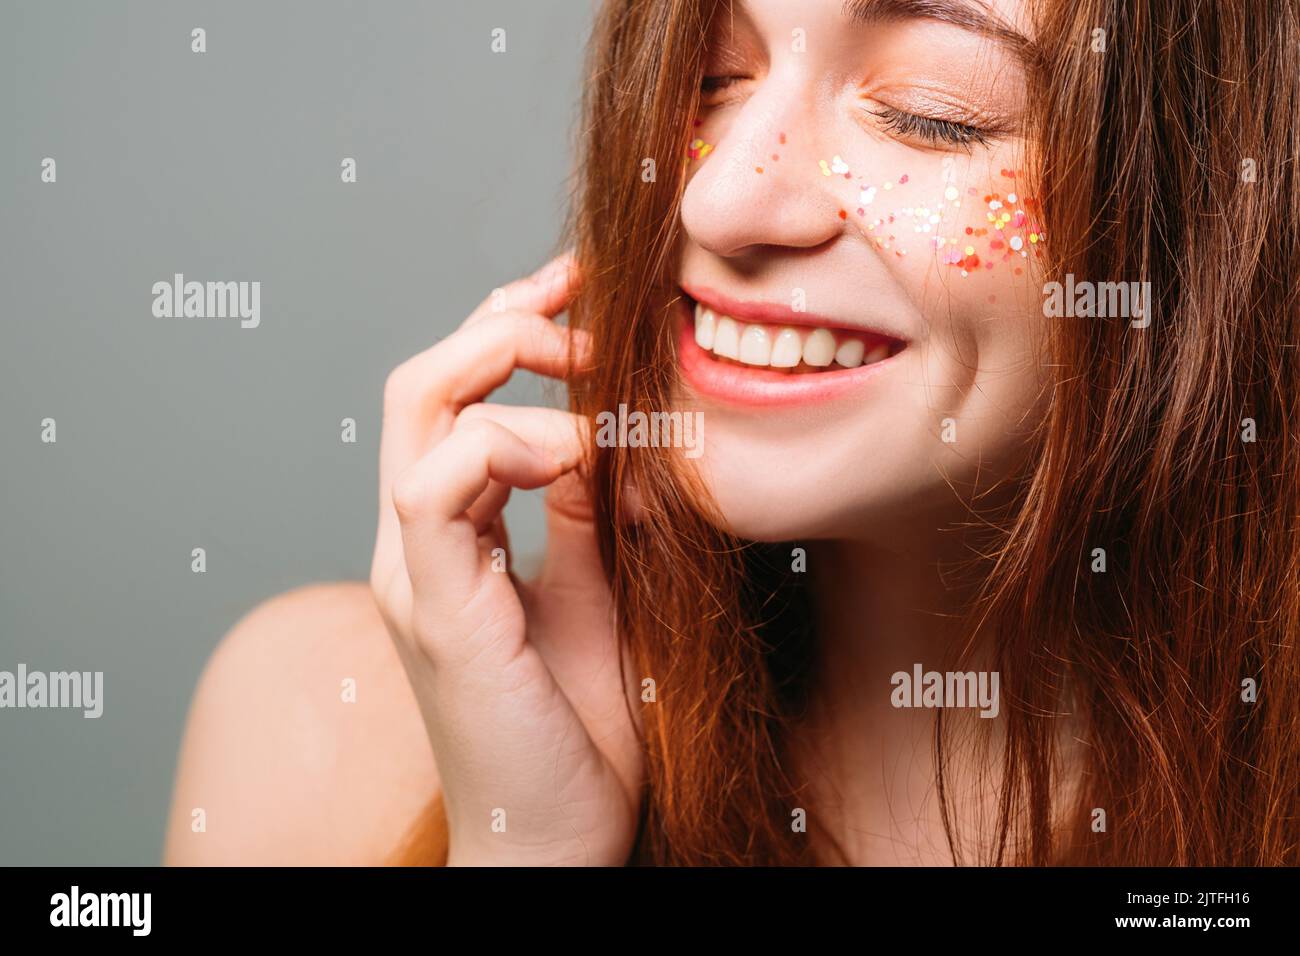 glitter makeup fresh skin youth beauty female Stock Photo